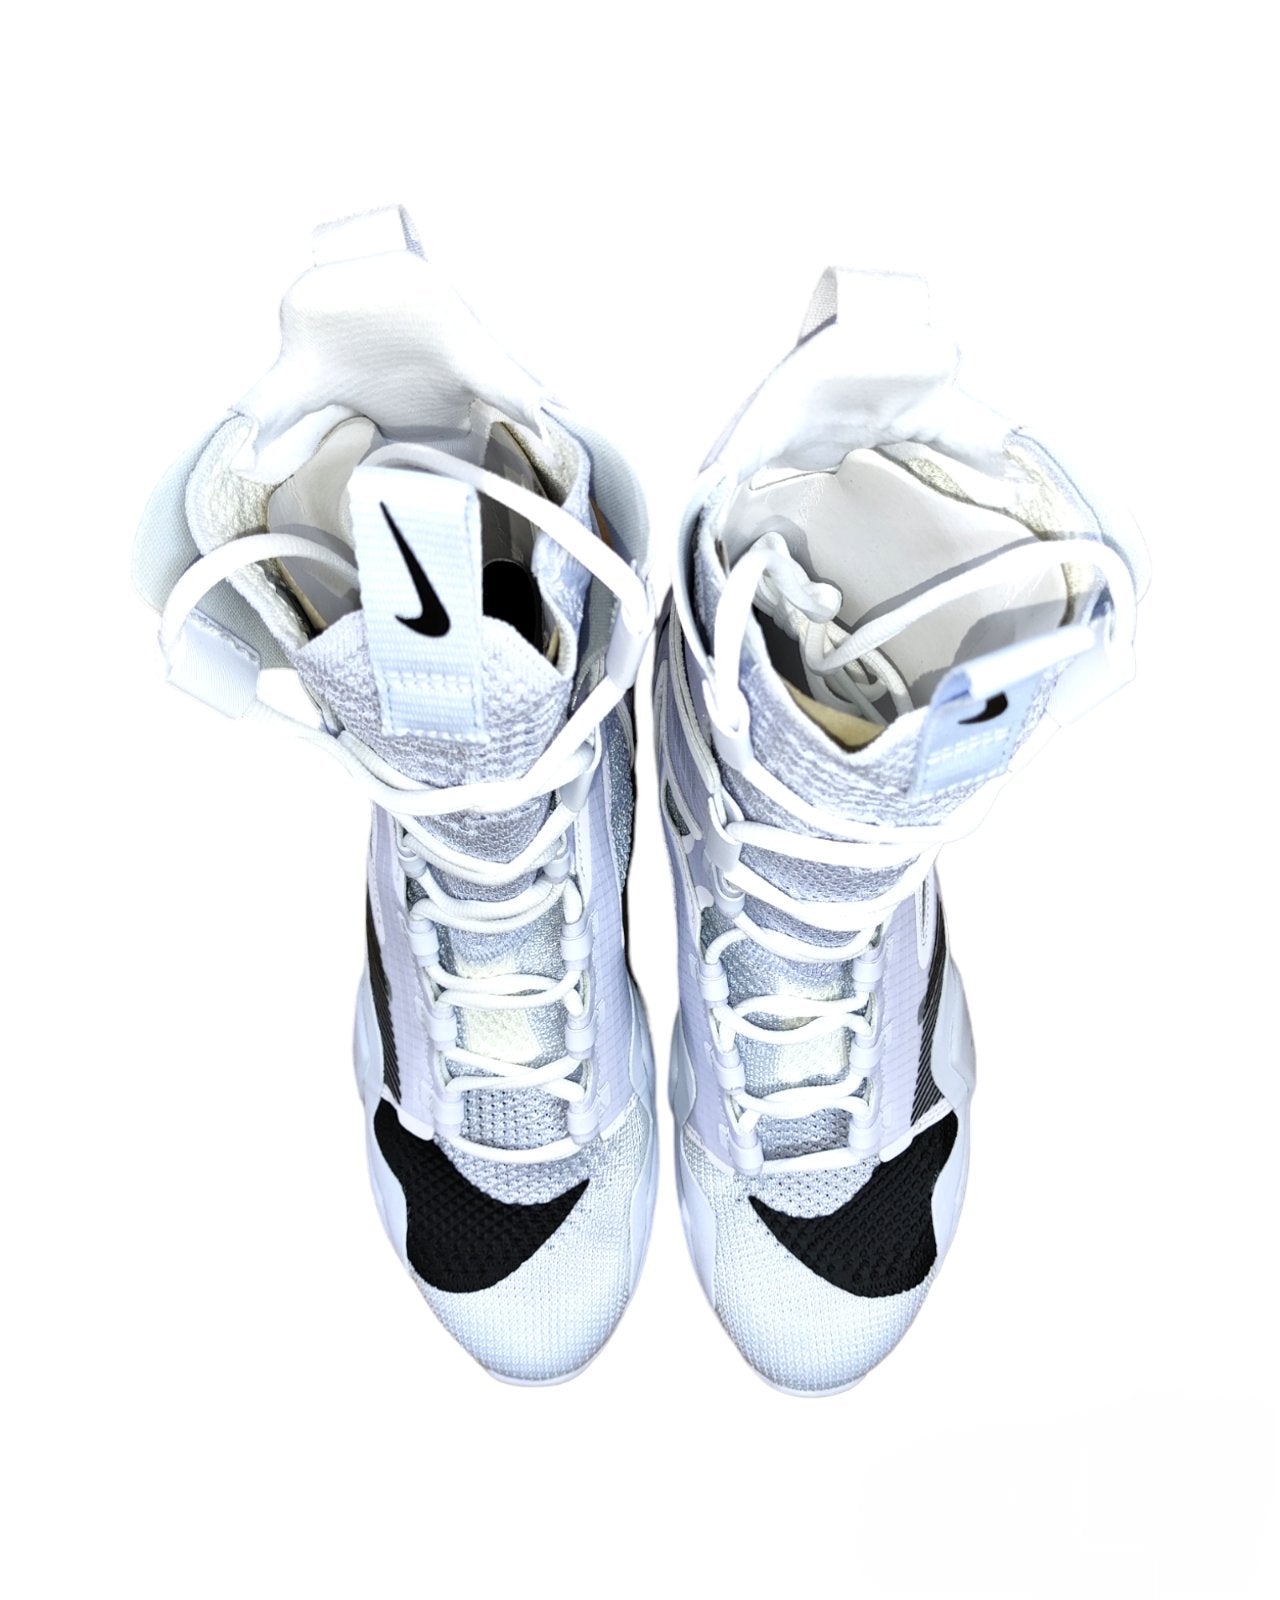 NIKE HYPERKO 2 Boxing Shoes White